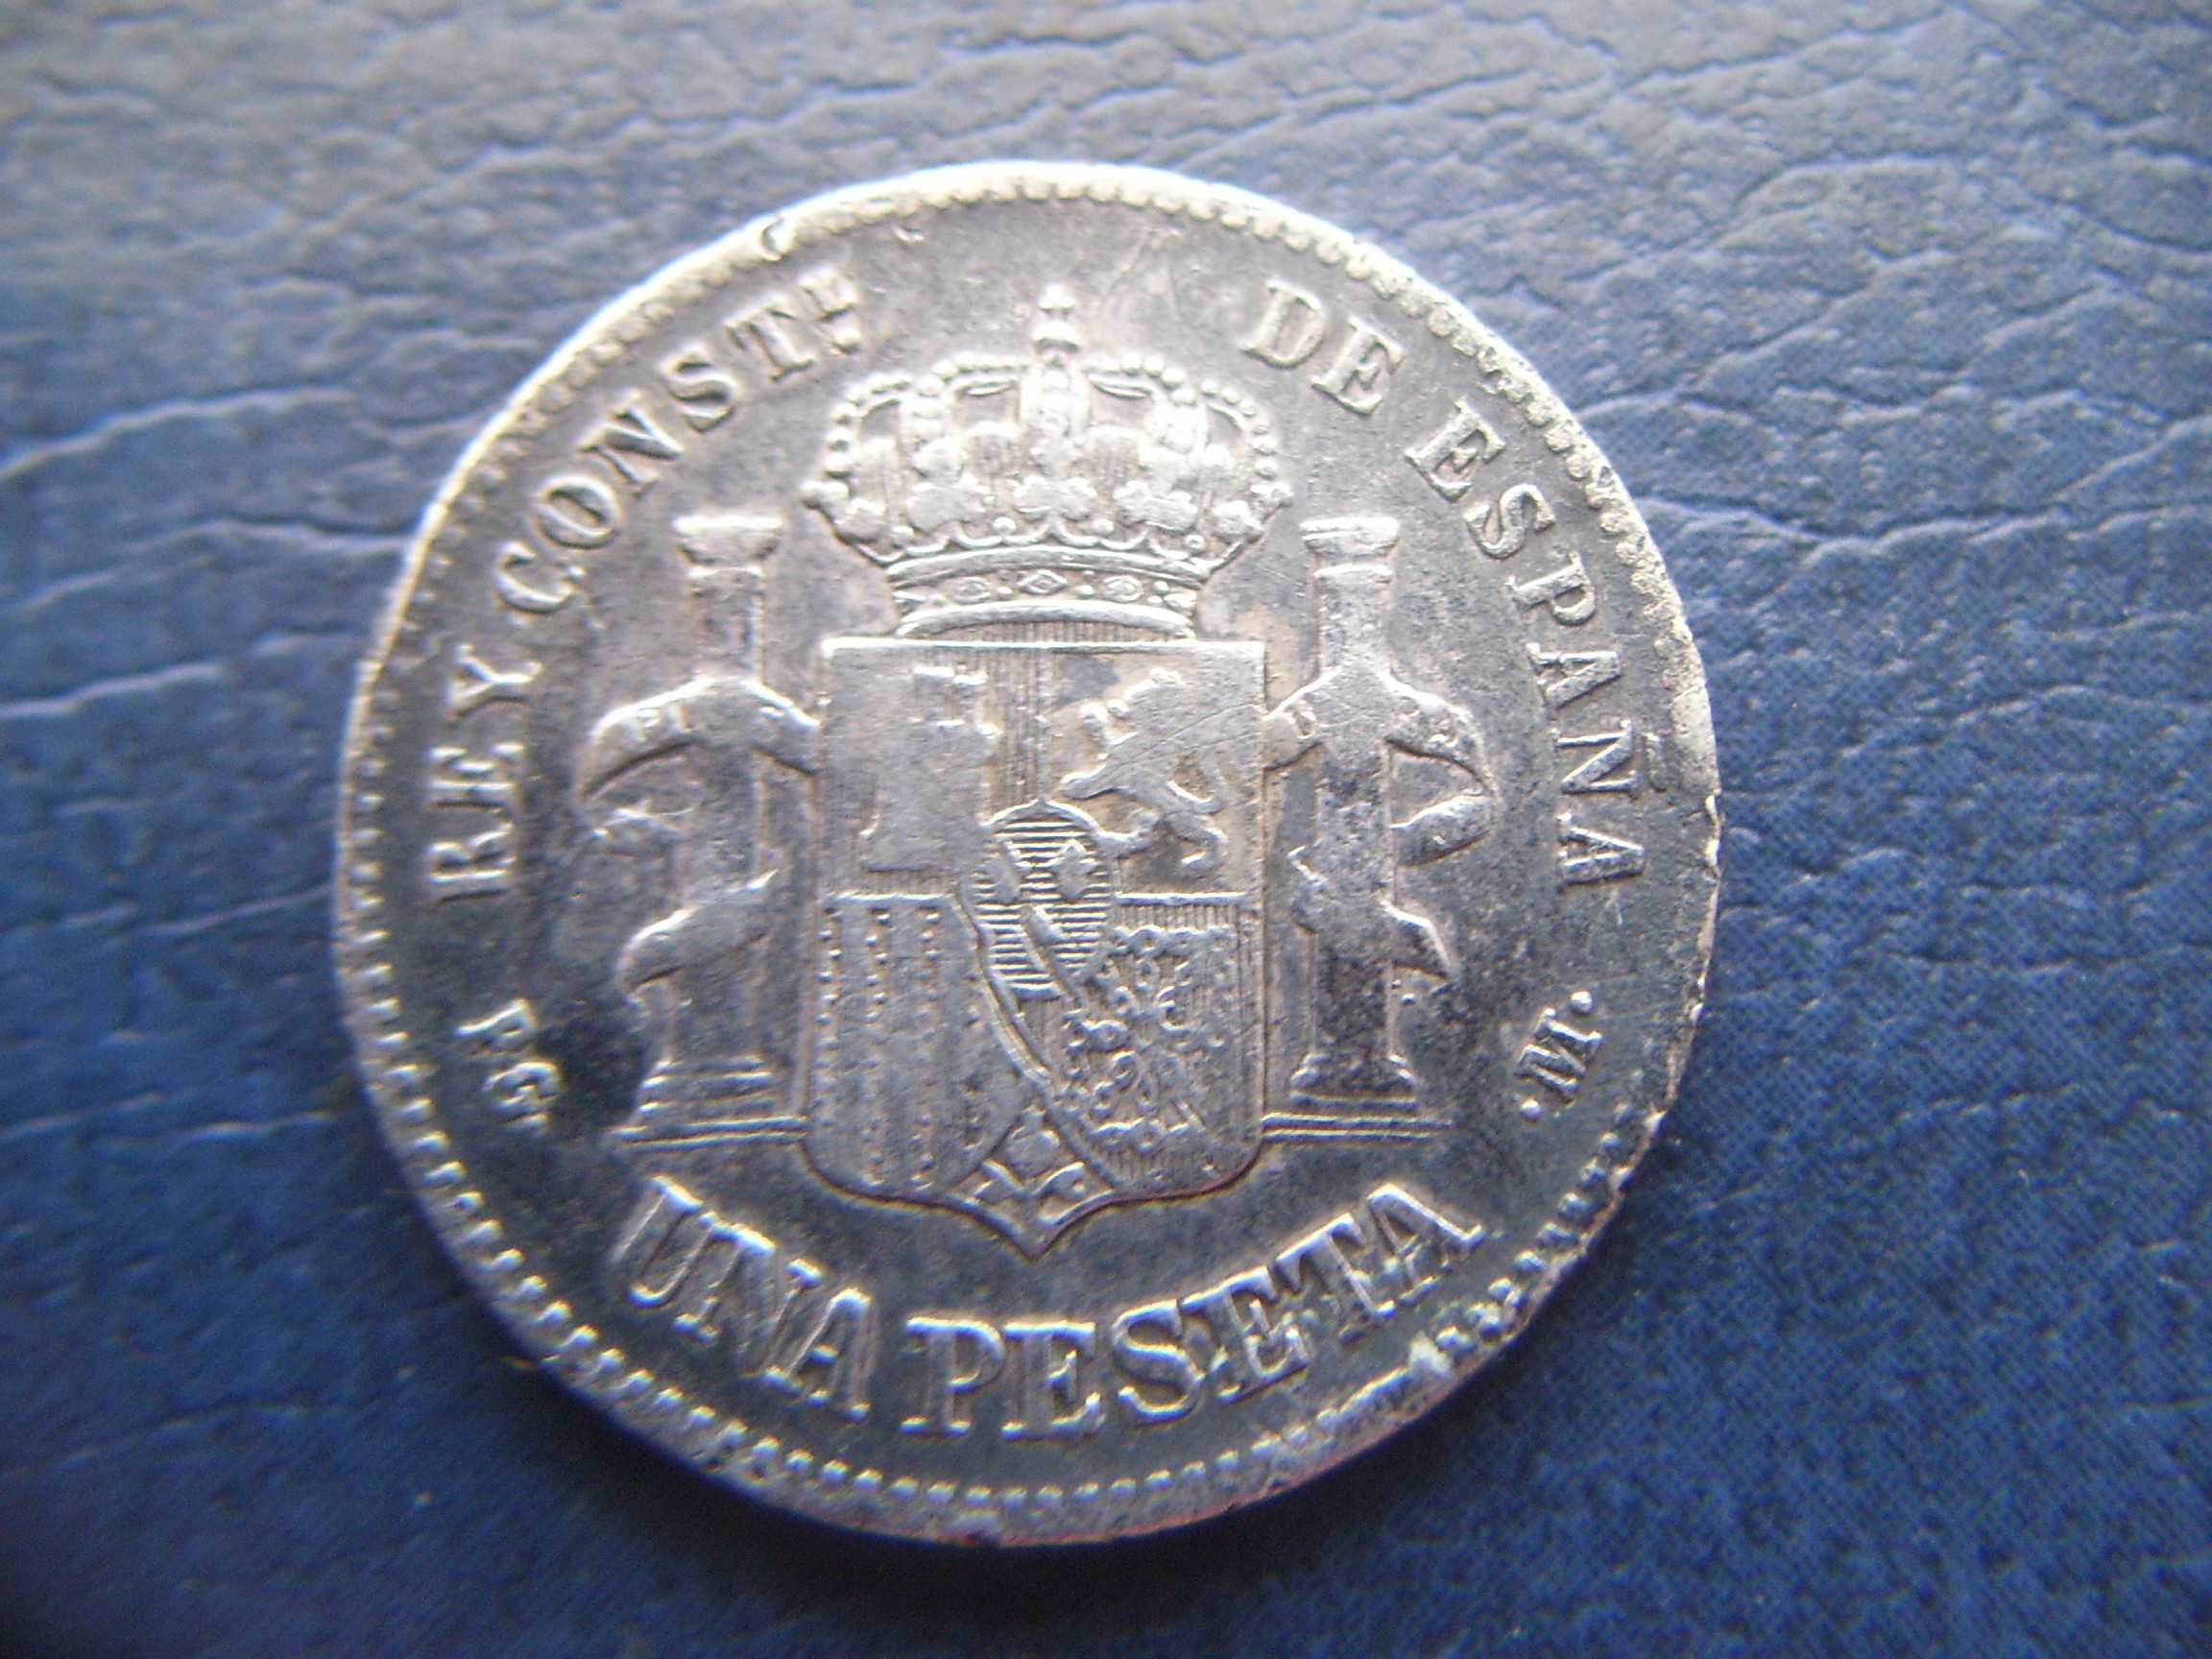 Stare monety 1 peseta 1891 Hiszpania srebro